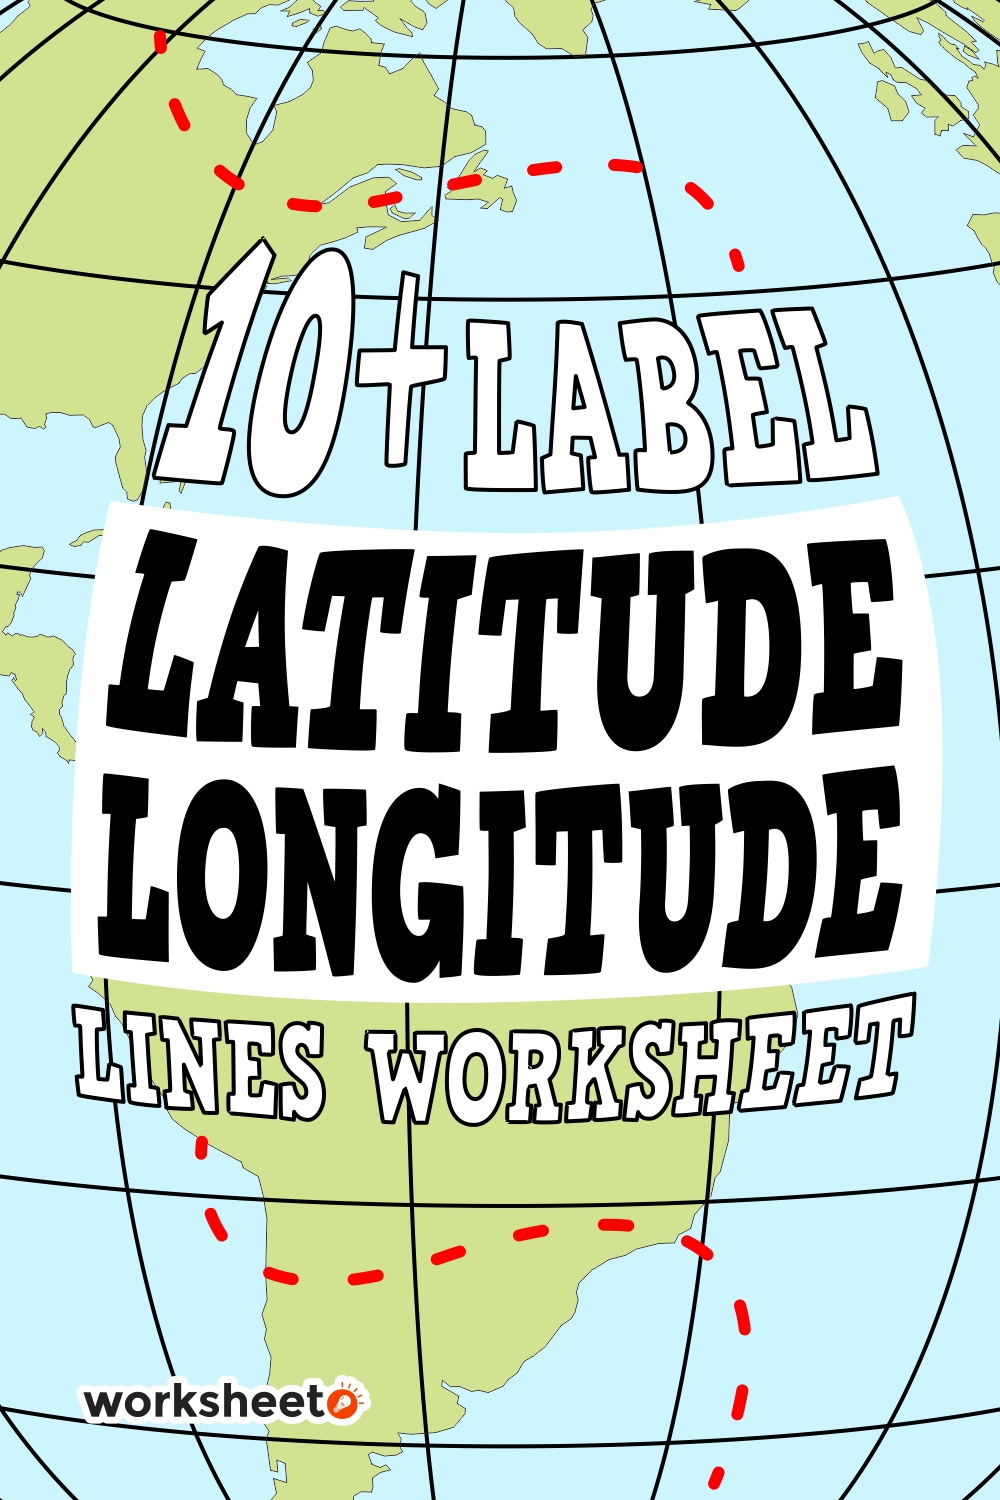 Label Latitude Longitude Lines Worksheet